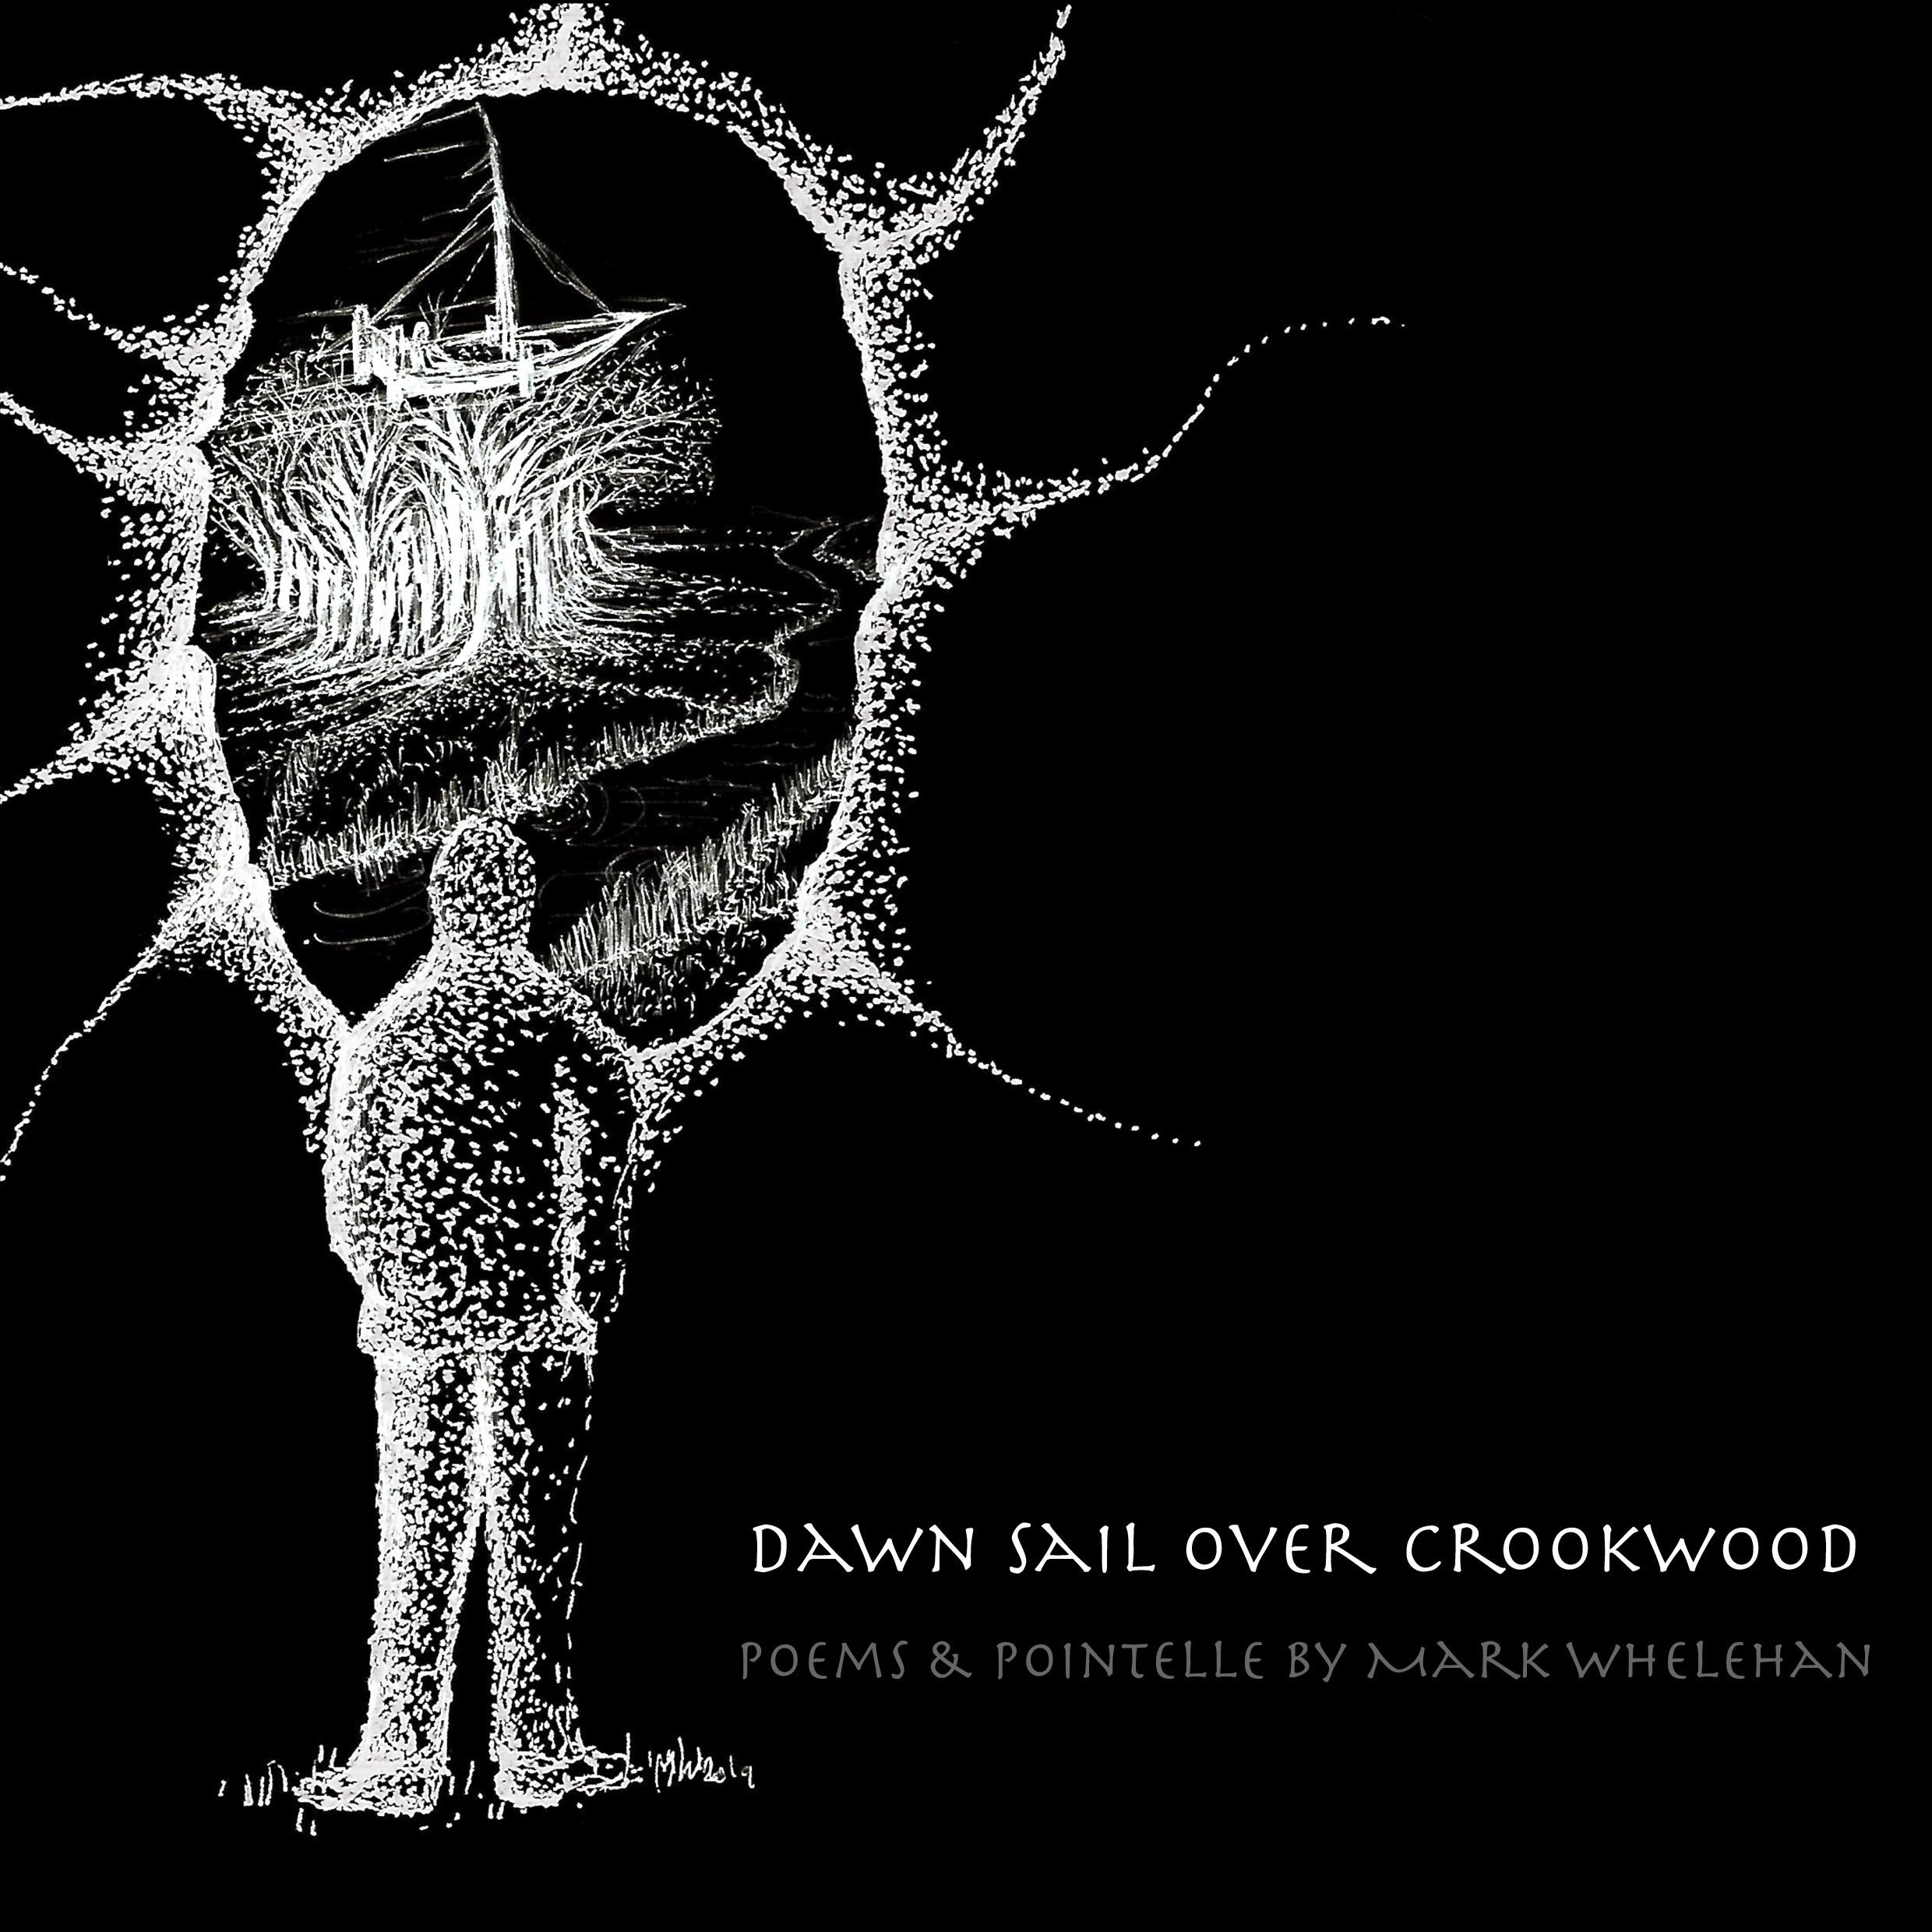 Dawn Sail over Crookwood by Mark Whelehan